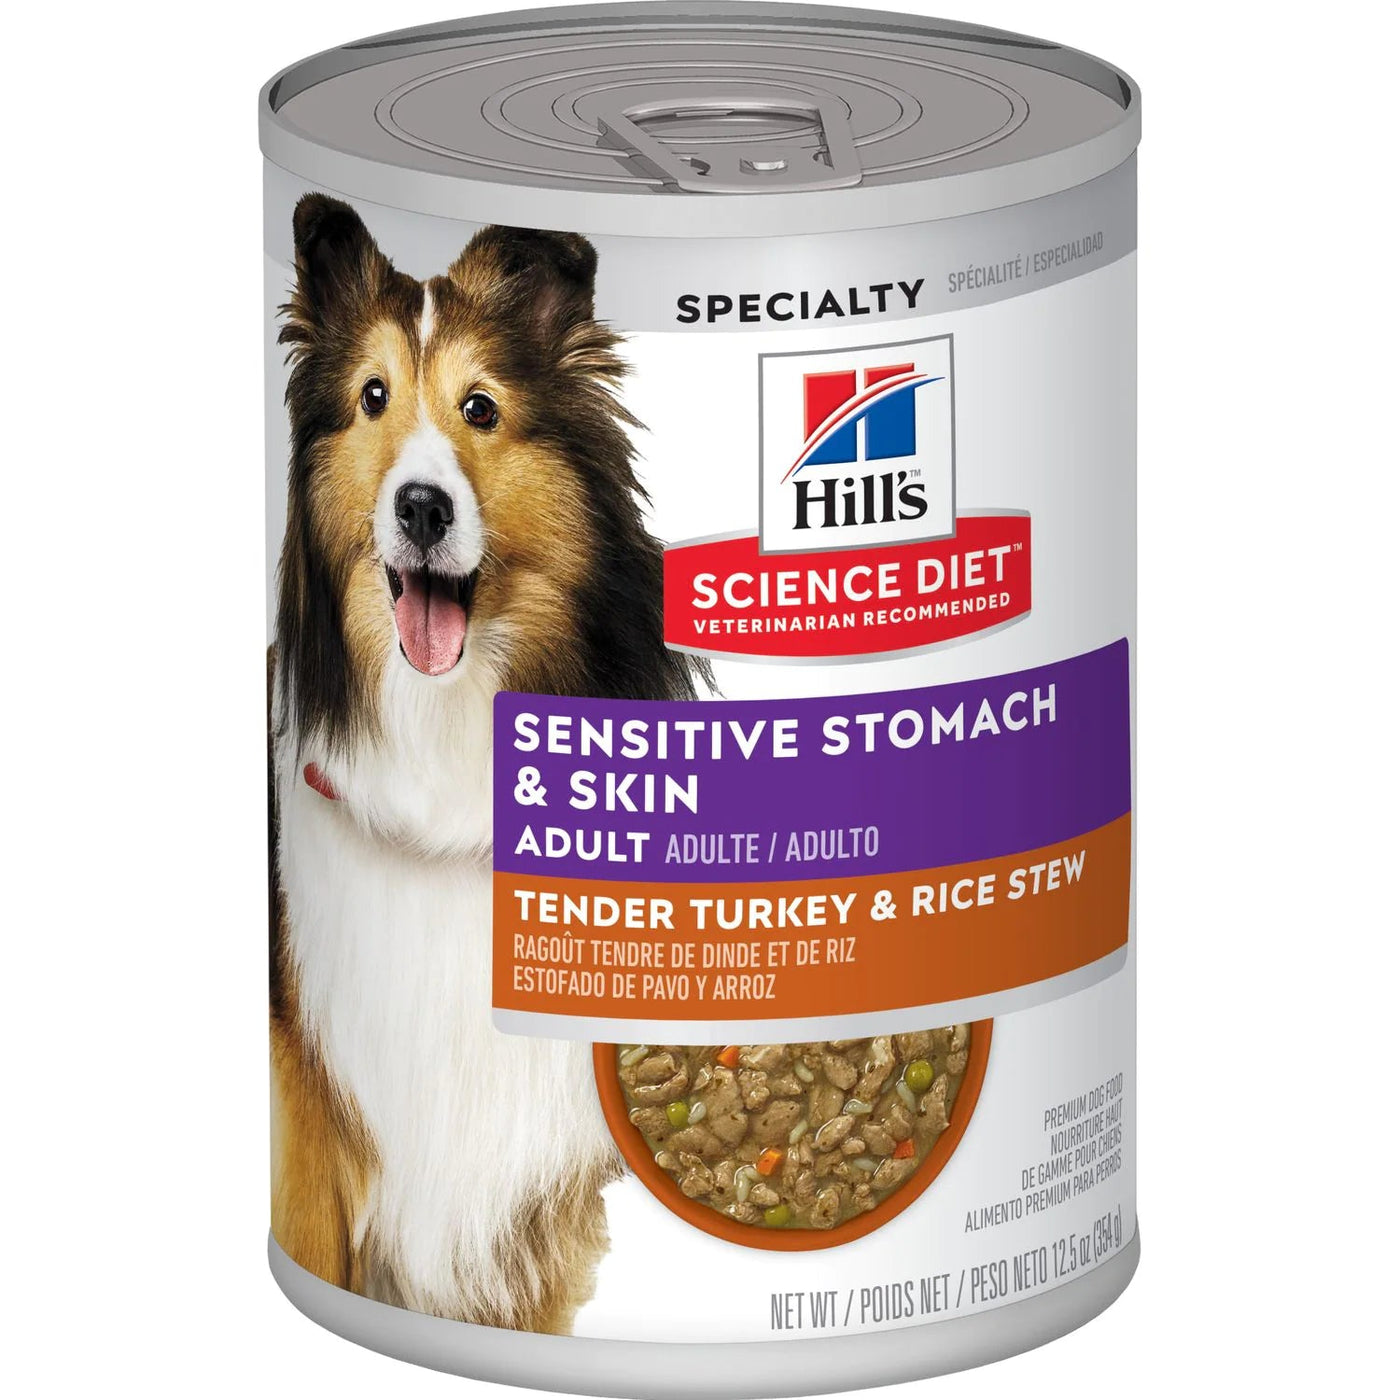 Adult Sensitive Stomach & Skin Tender Turkey & Rice Stew  - Wet Dog Food - Hill's Science Diet